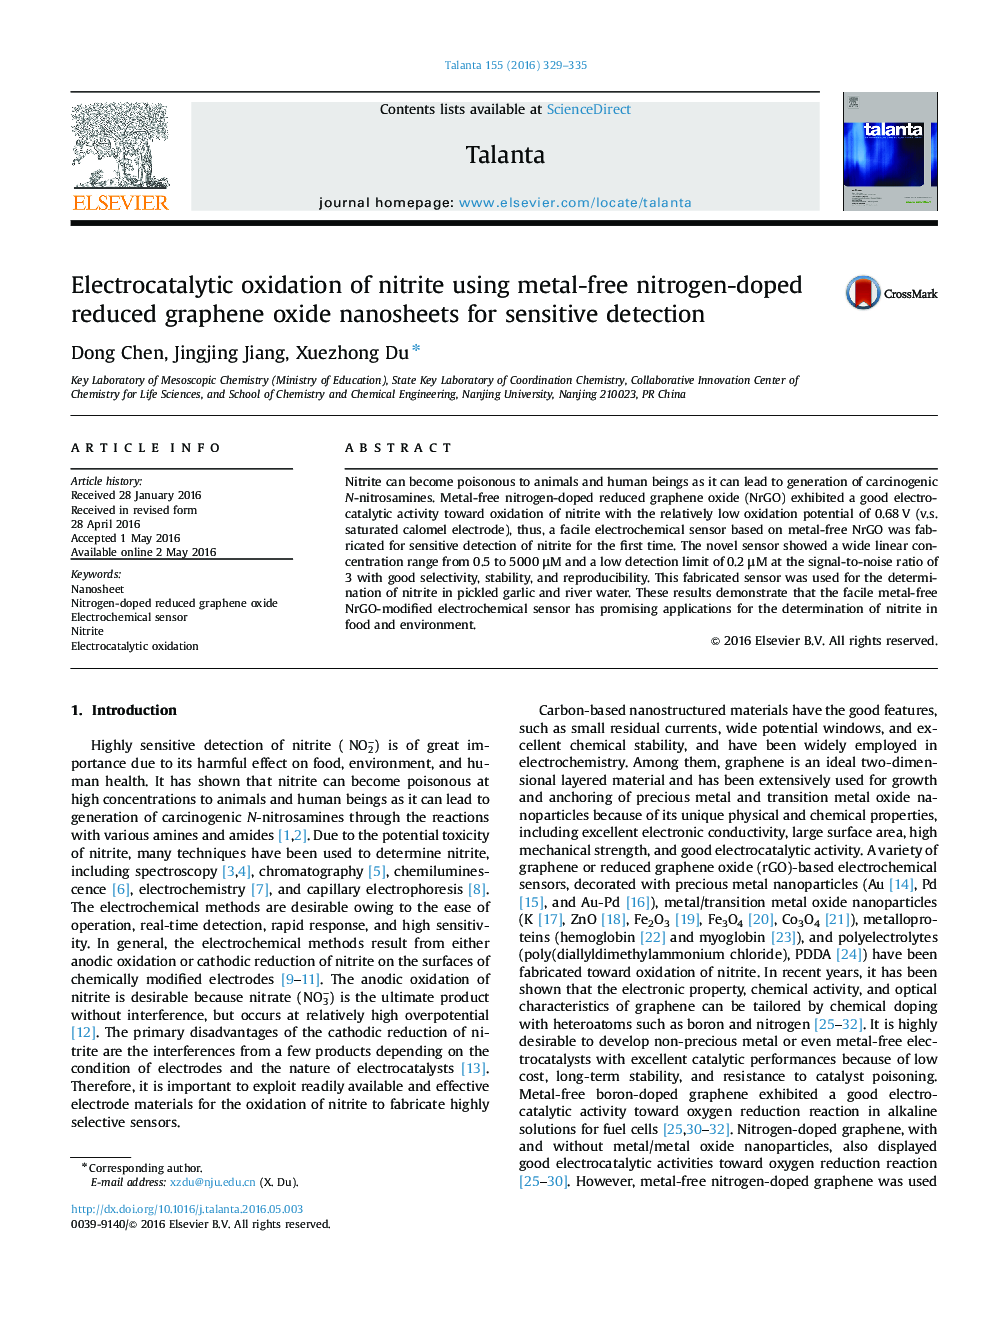 Electrocatalytic oxidation of nitrite using metal-free nitrogen-doped reduced graphene oxide nanosheets for sensitive detection